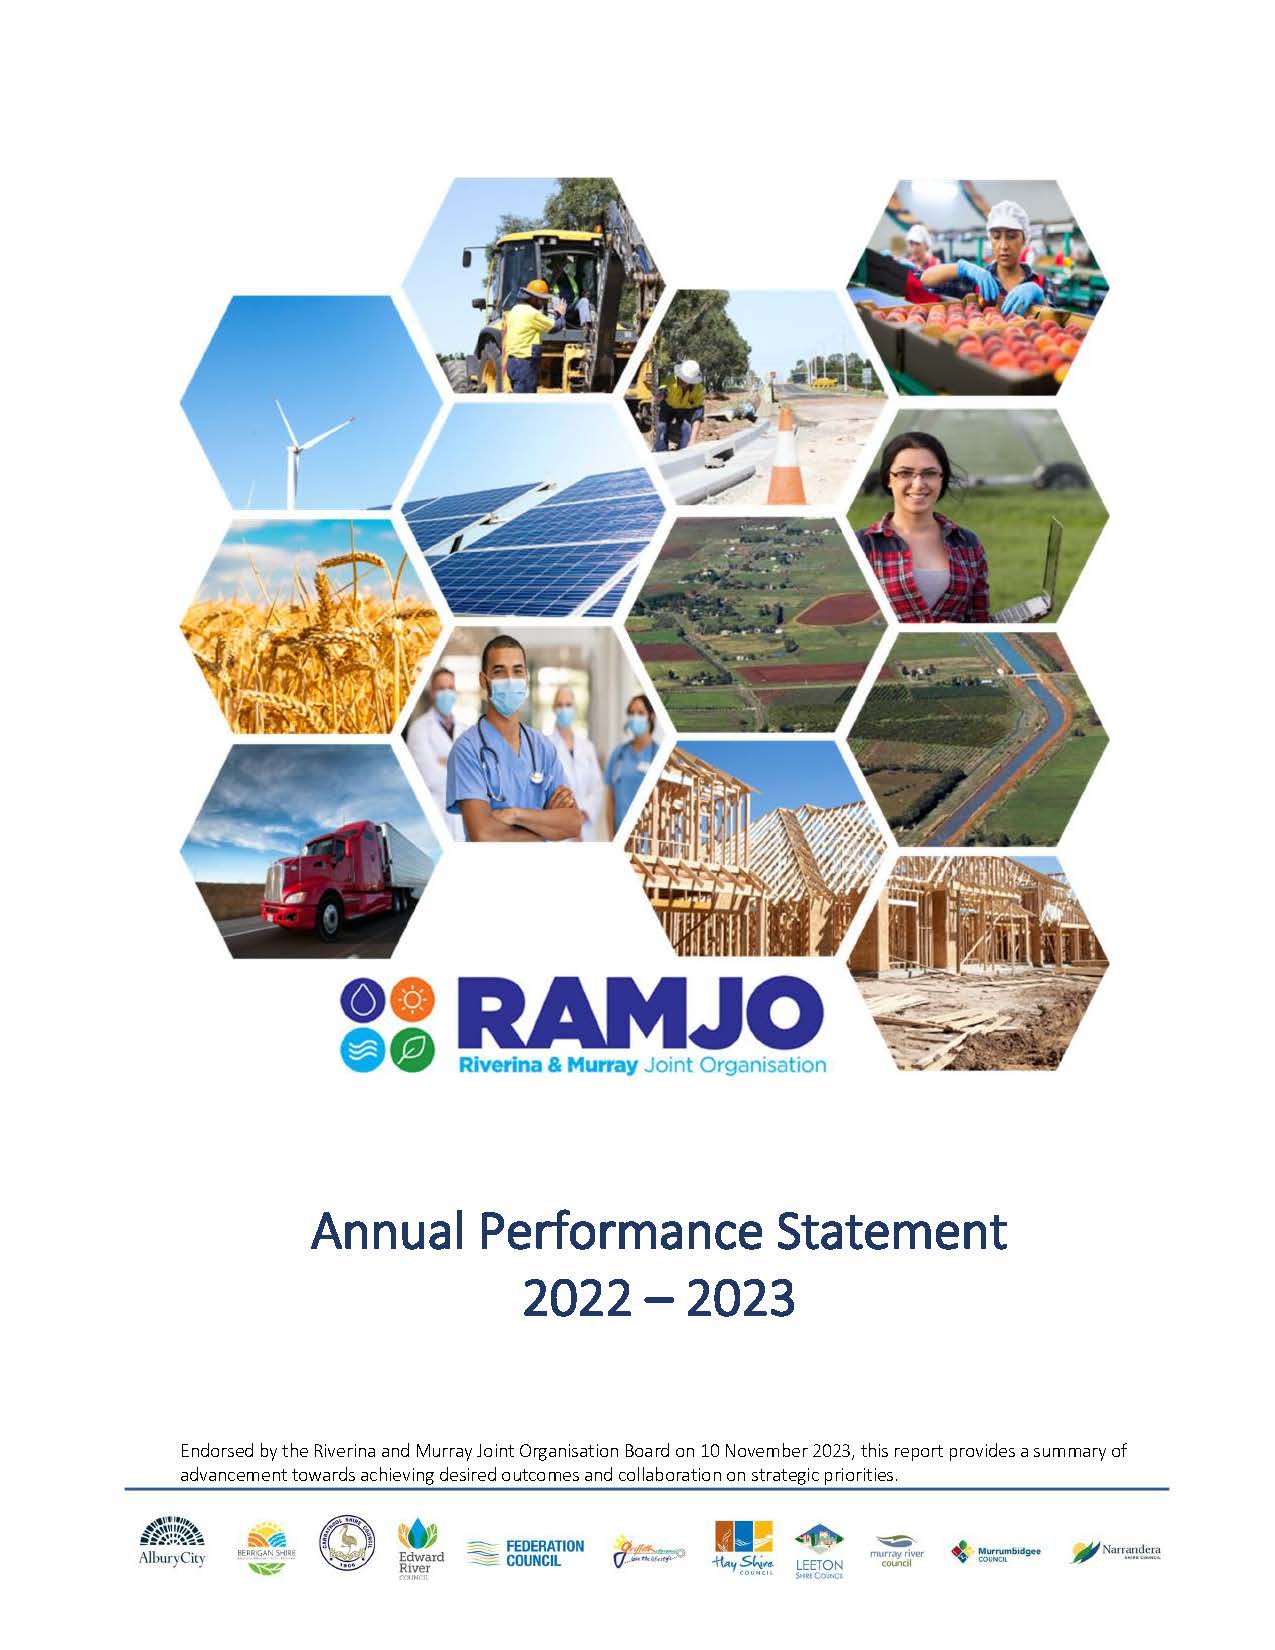 RAMJO Water Position Paper 2020